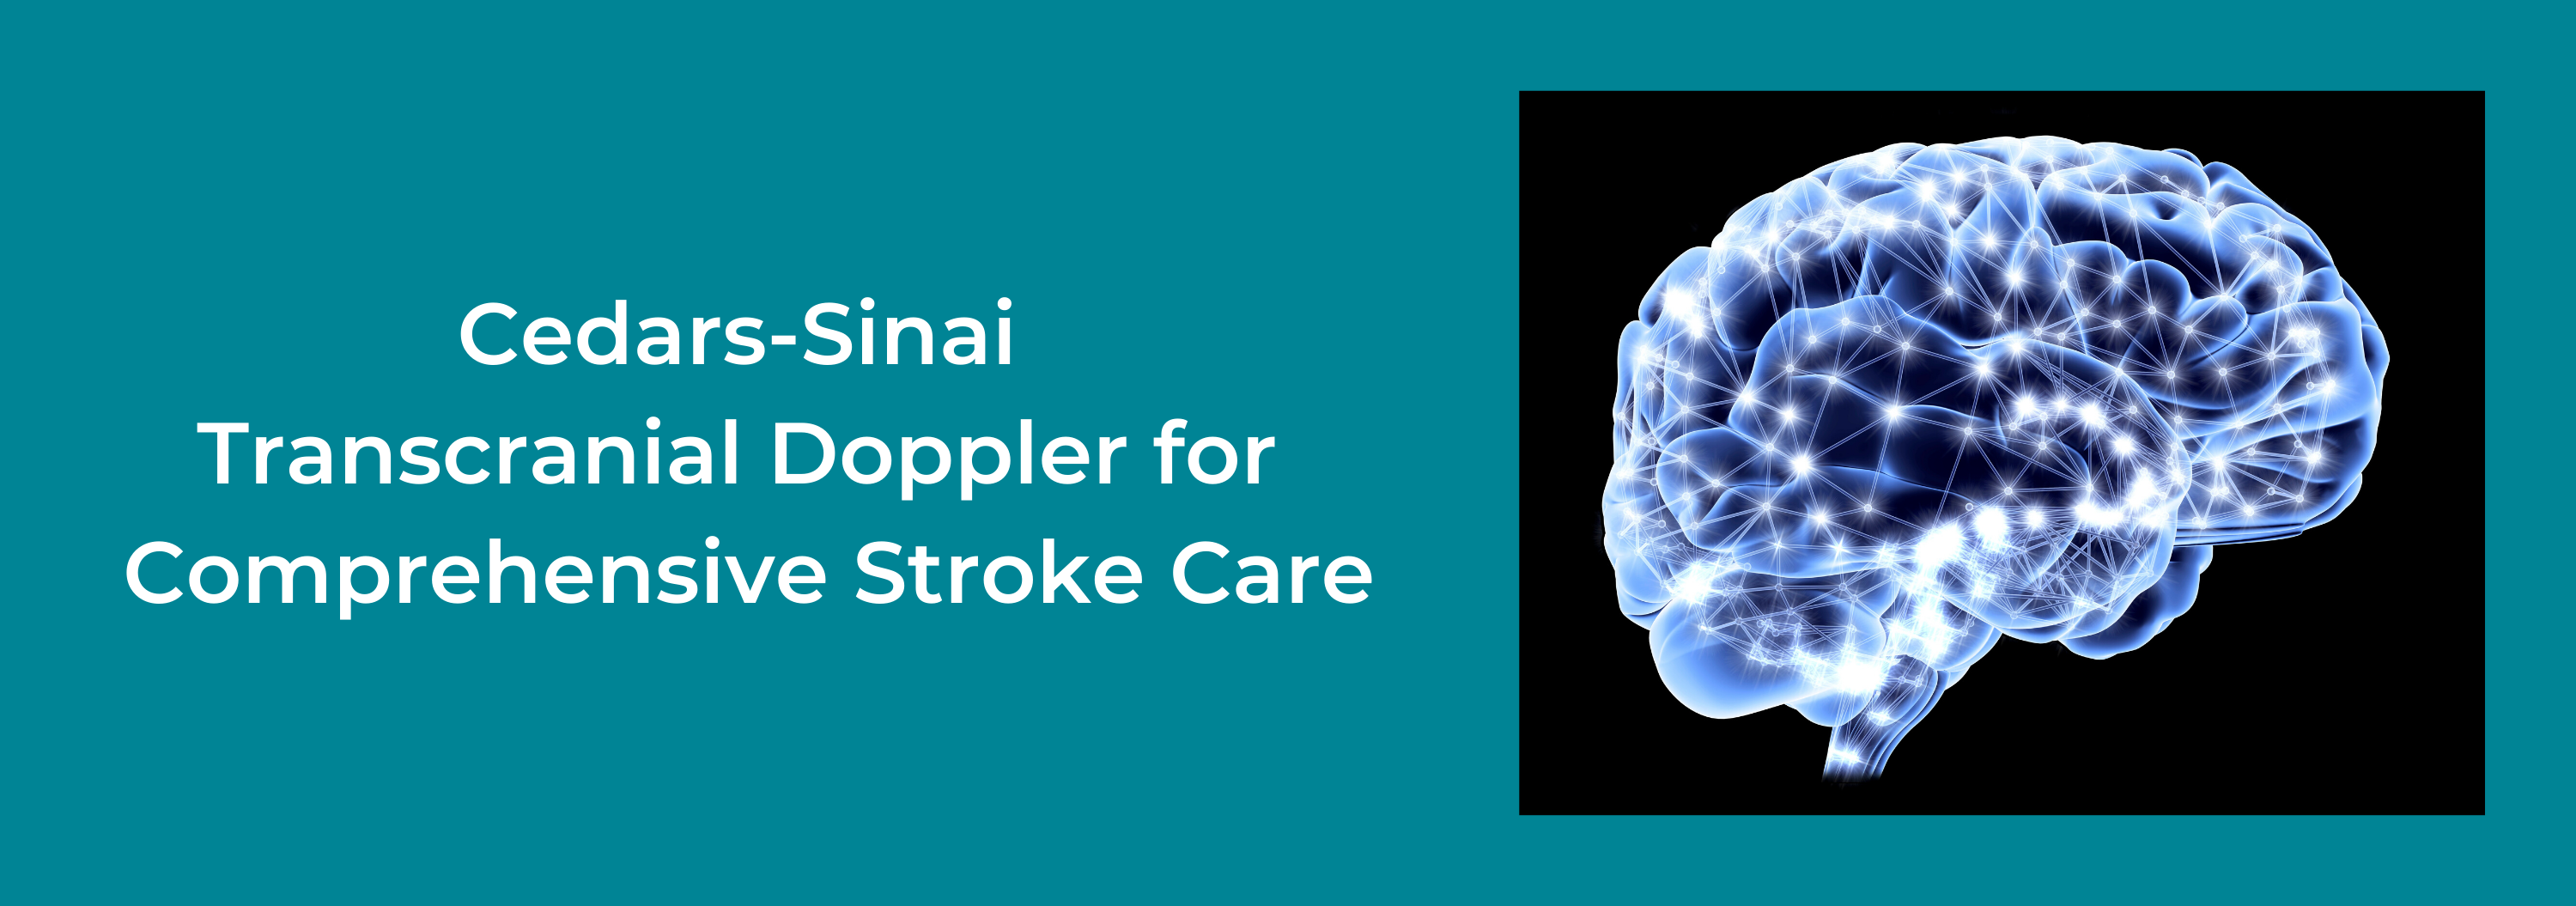 2020 March Cedars-Sinai Transcranial Doppler for Comprehensive Stroke Care (Postponed) Banner